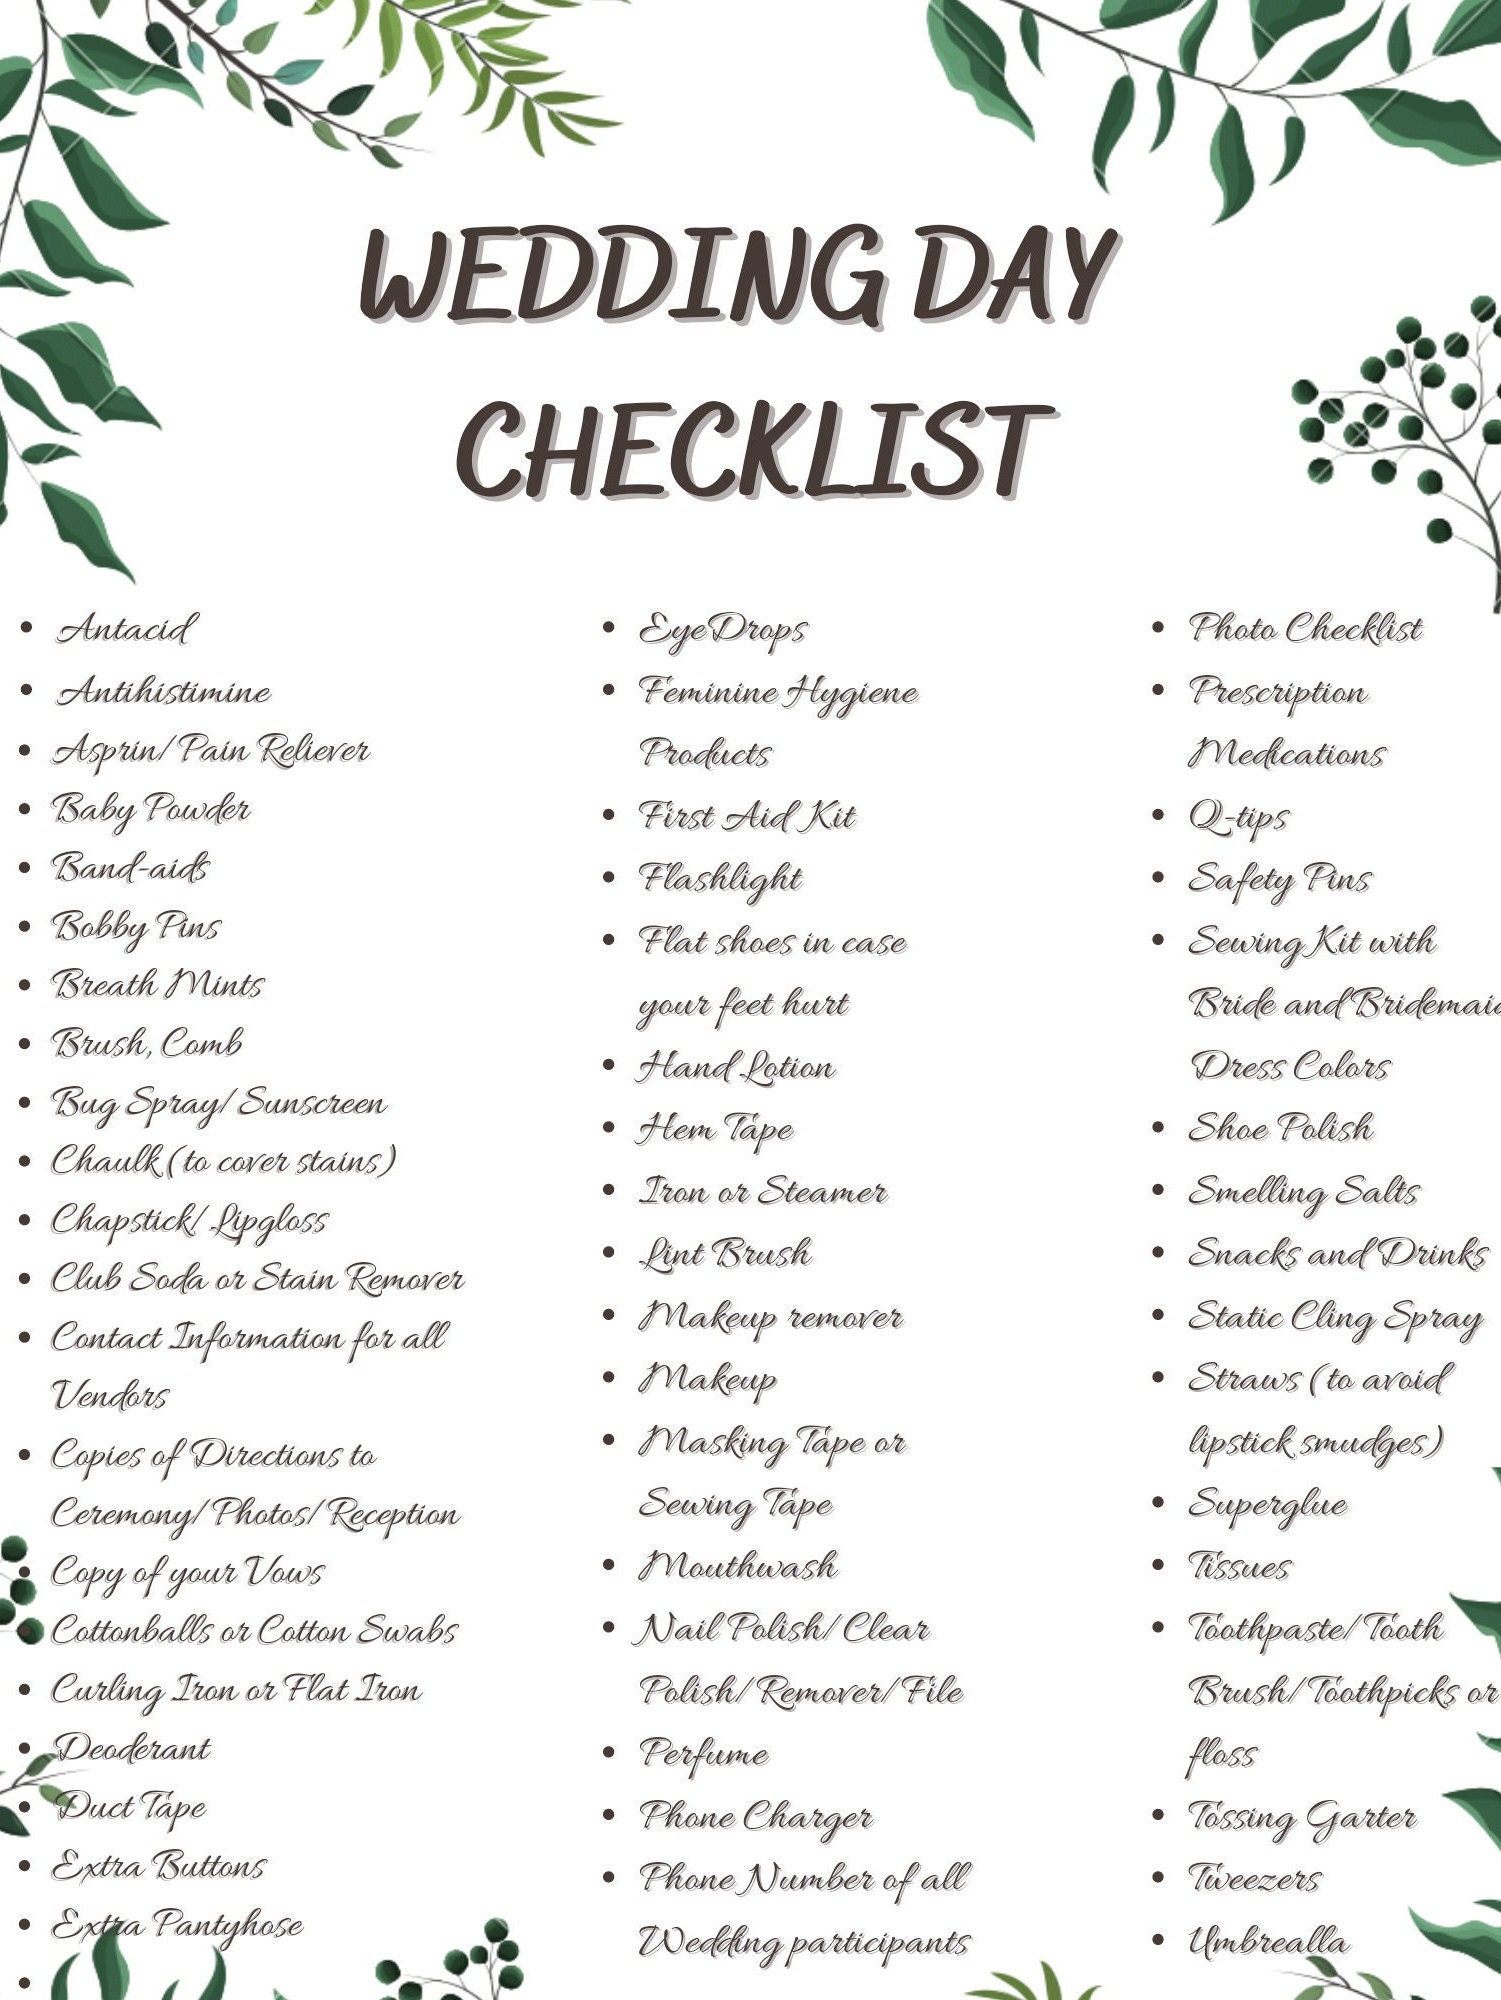 wedding-checklist-wedding-planner-printable-sheet-ubicaciondepersonas